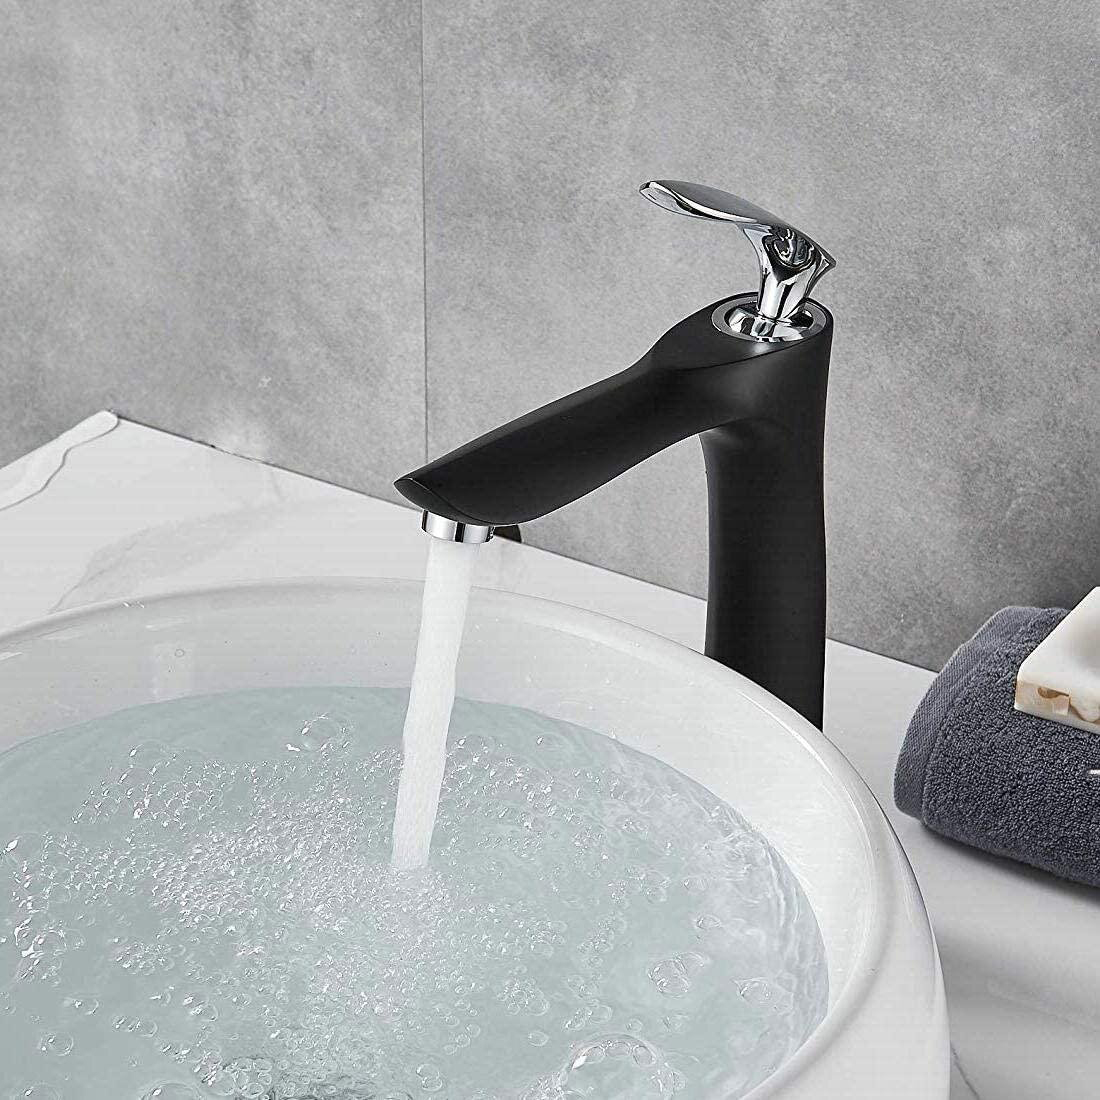 European Antique Black Tall Body Basin Faucet Bathroom Water Saving Insert Aerator Sink Mixer